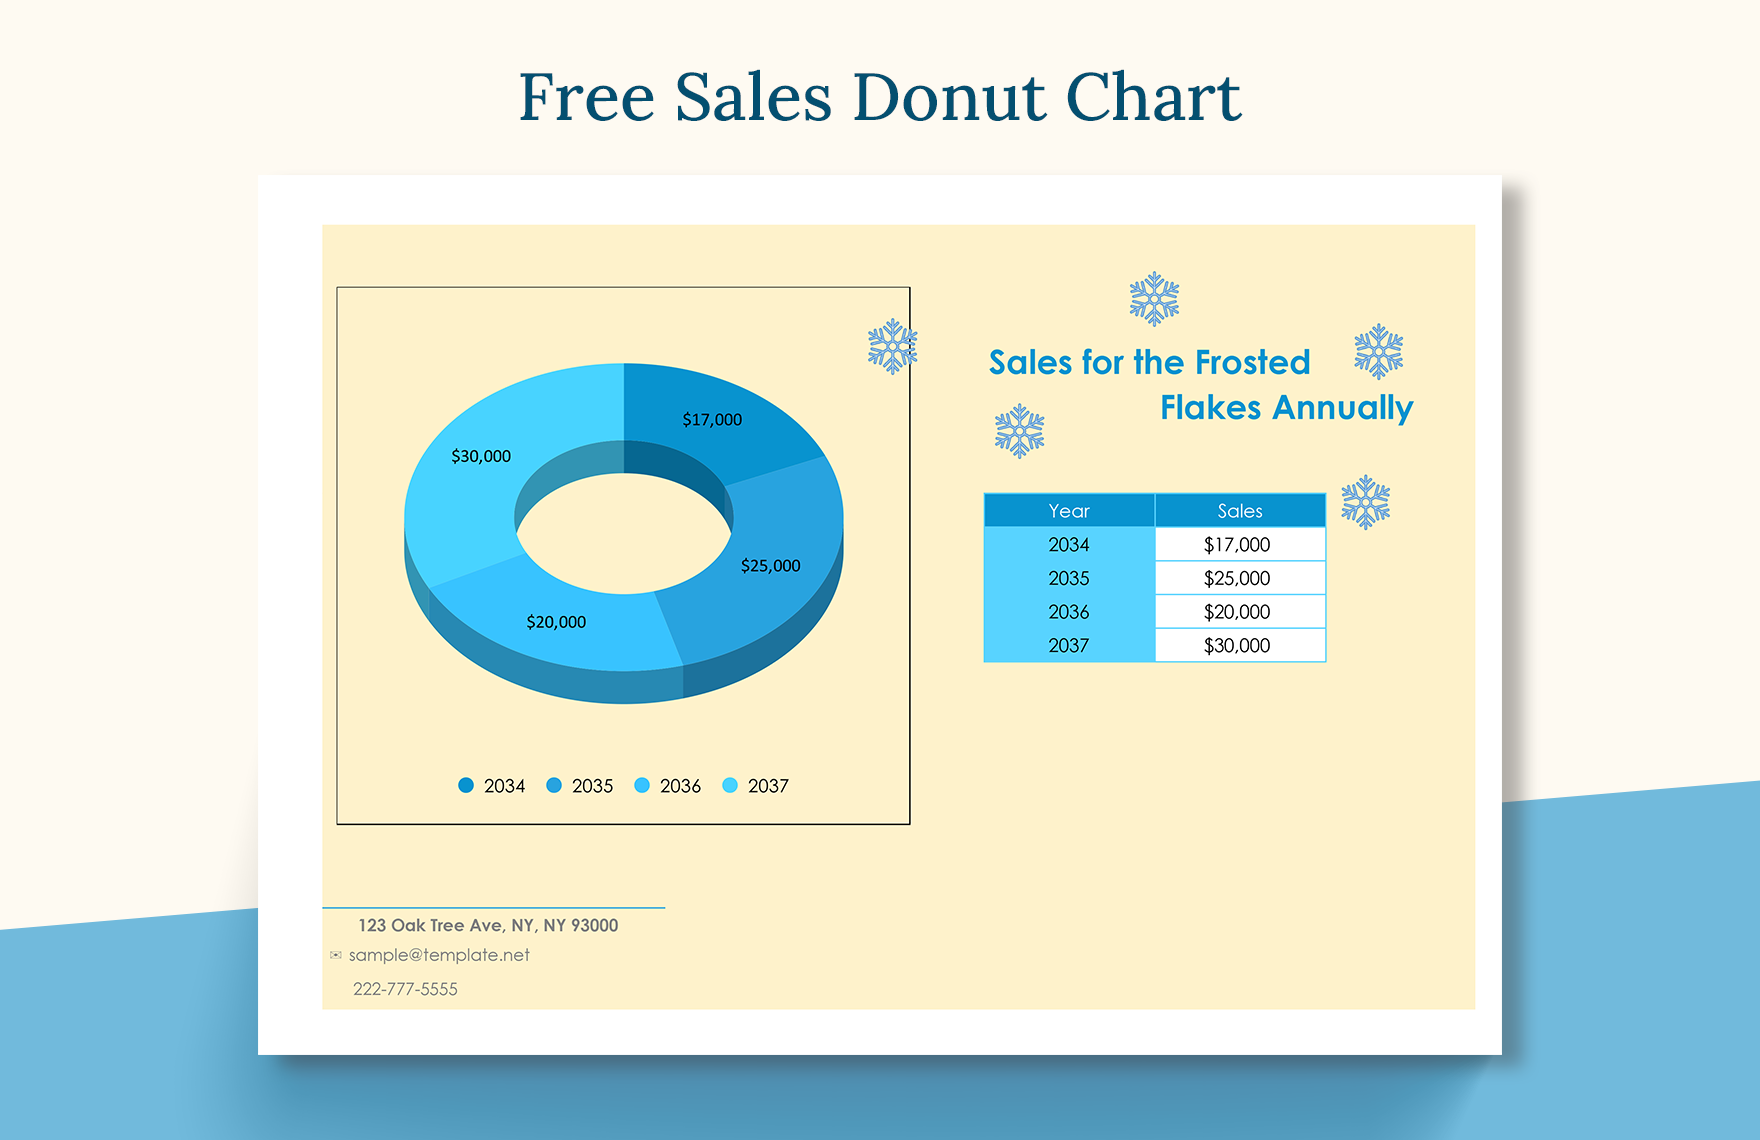 Free Sales Donut Chart